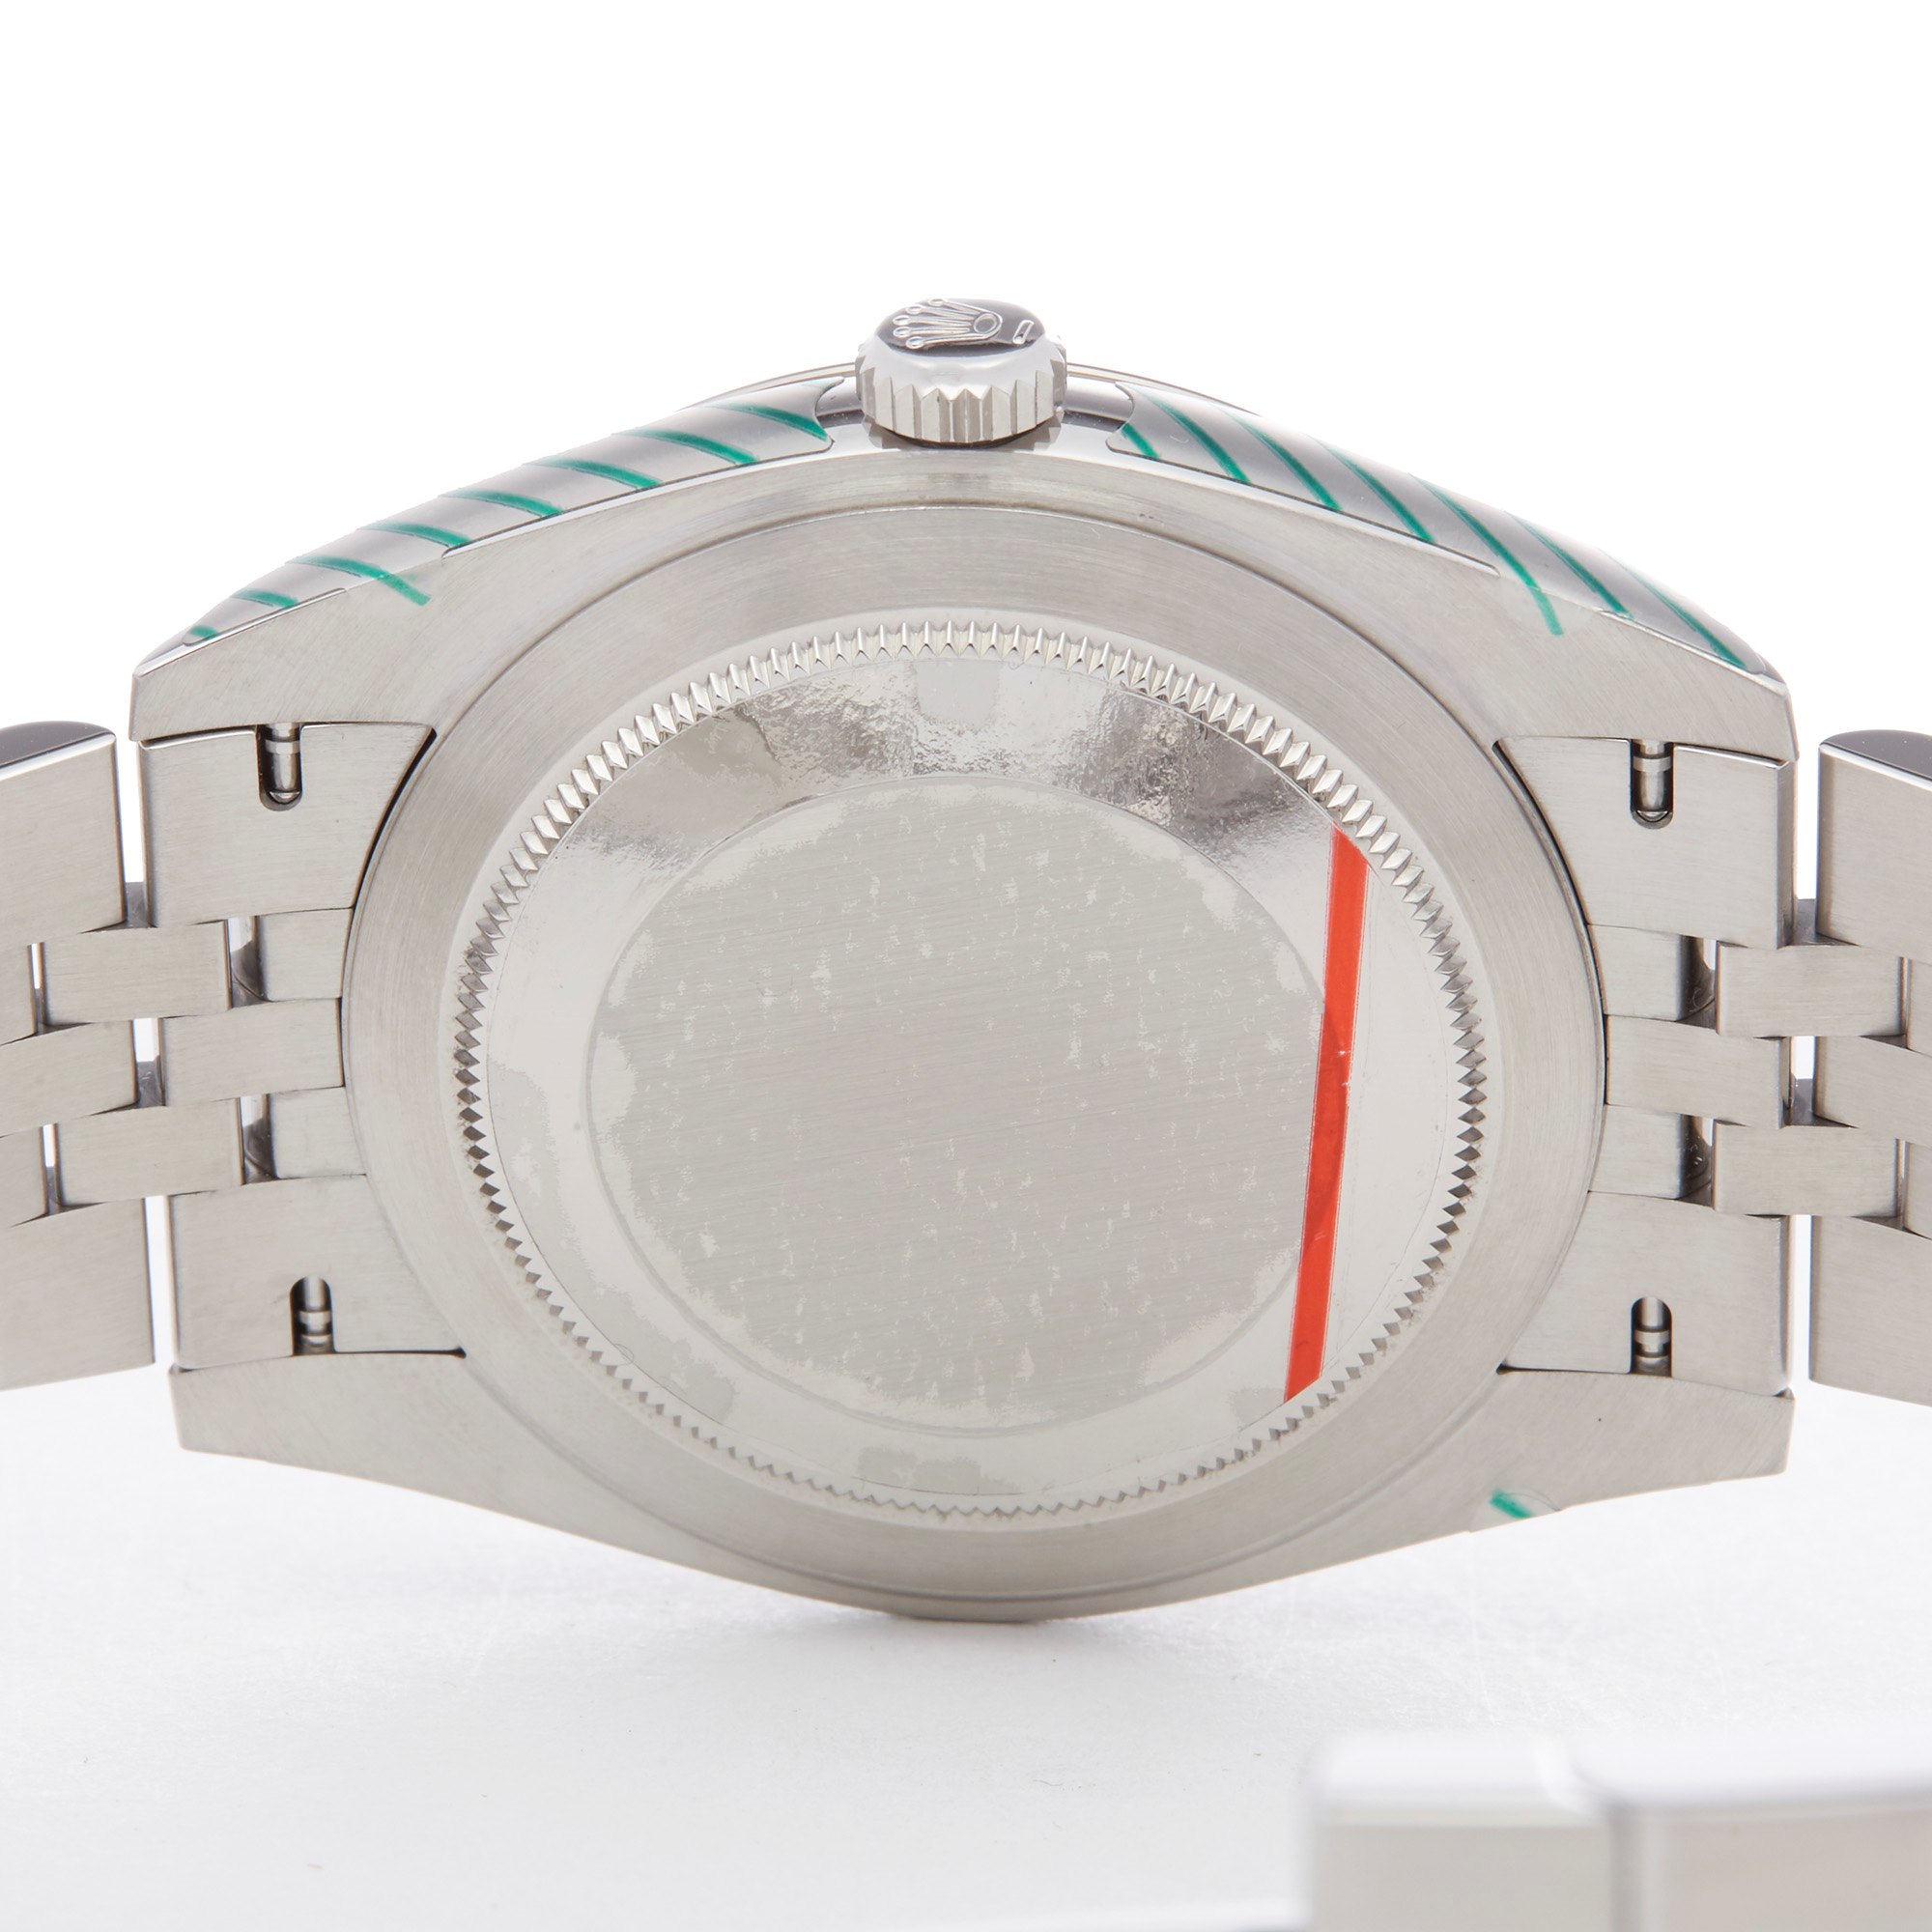 Rolex Datejust 41 Diamond Stainless Steel Watch 126334 - Image 6 of 8